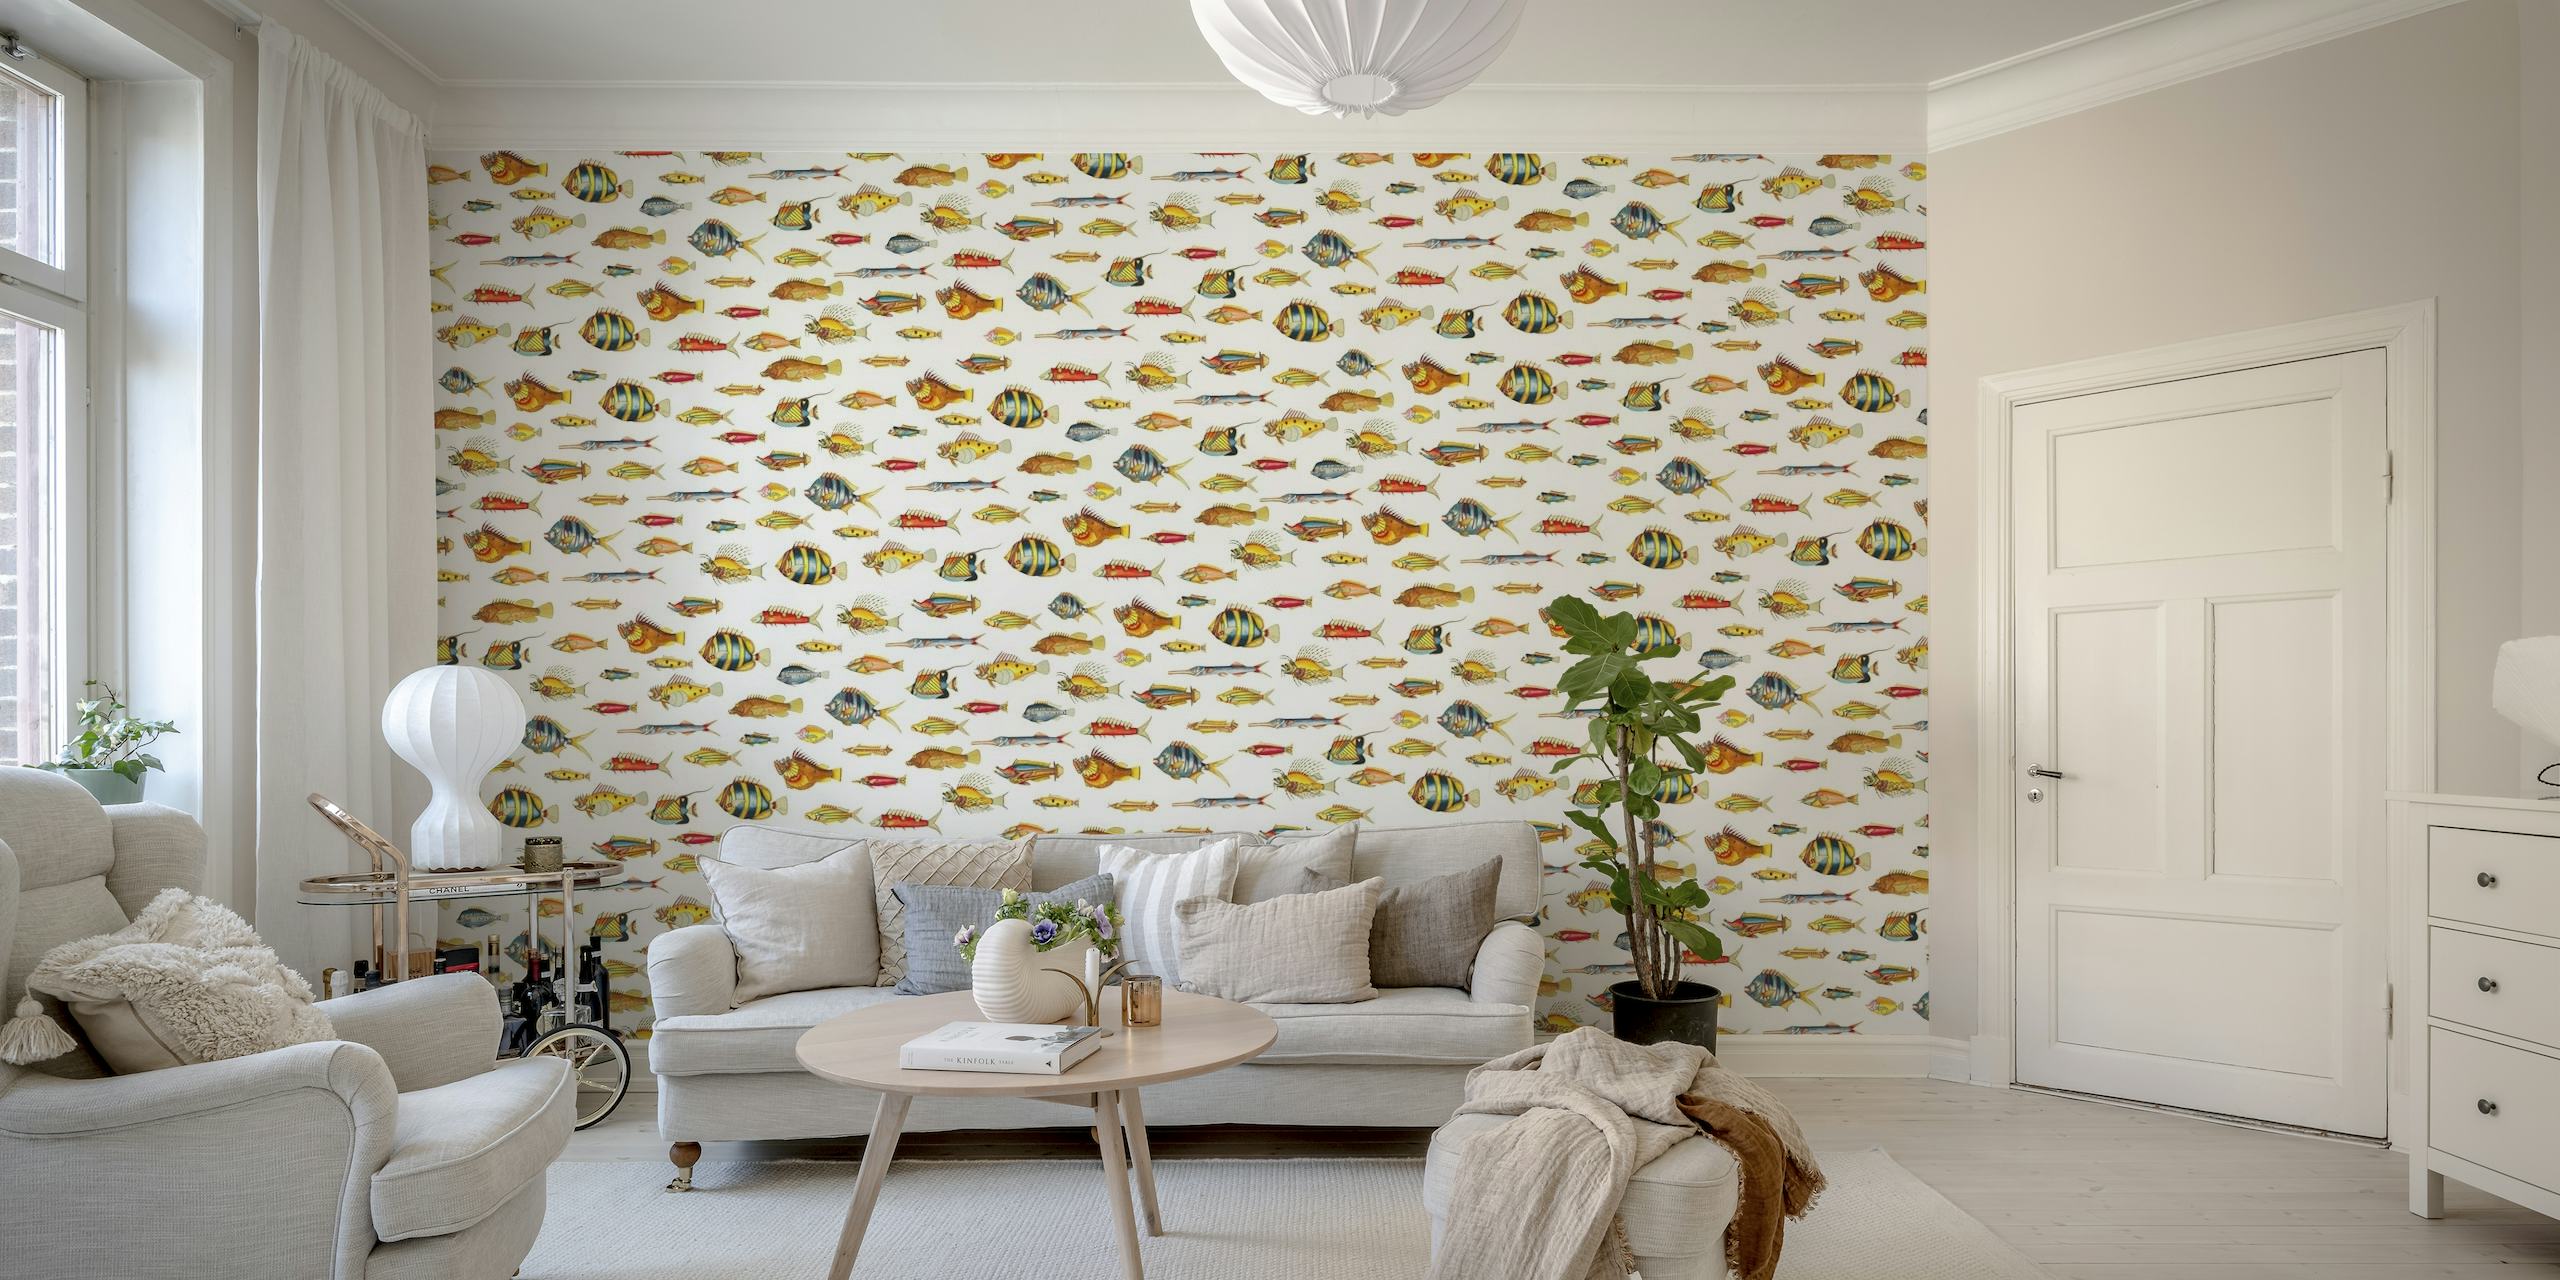 Colourful fish wallpaper